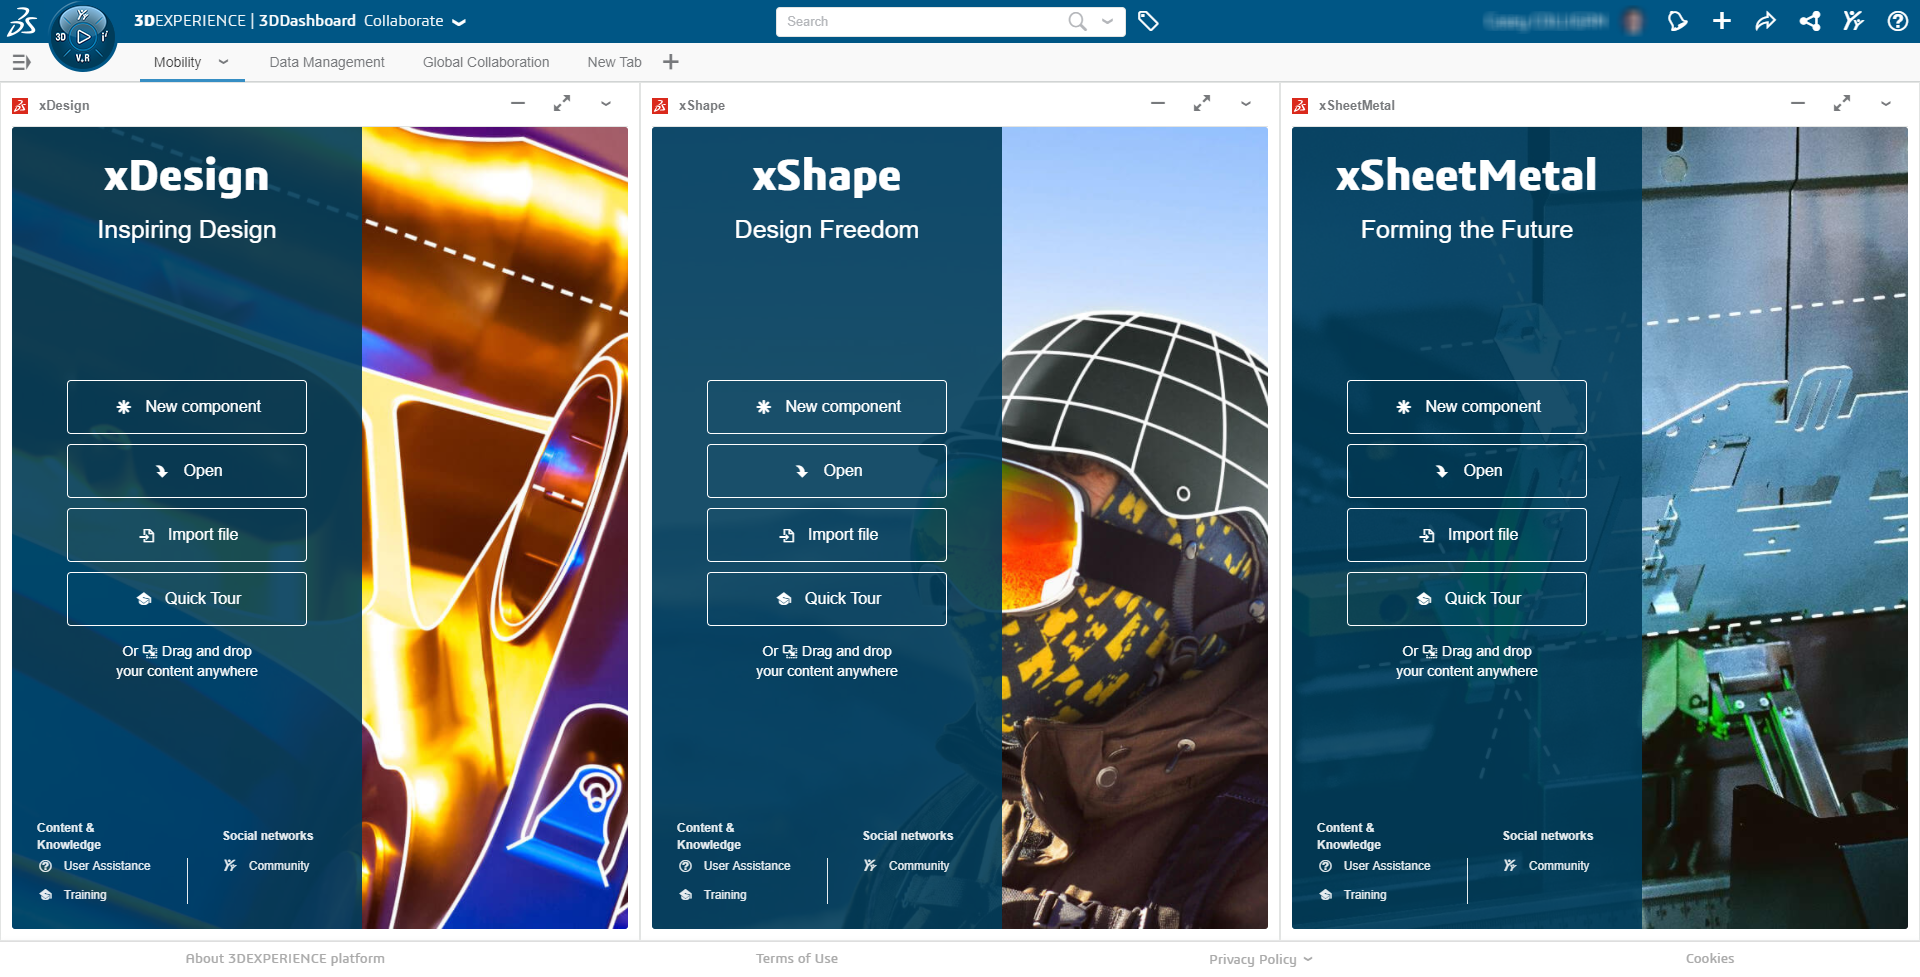 3DEXPERIENCE Platform Dashboard: xDesign, xShape, and xSheetMetal